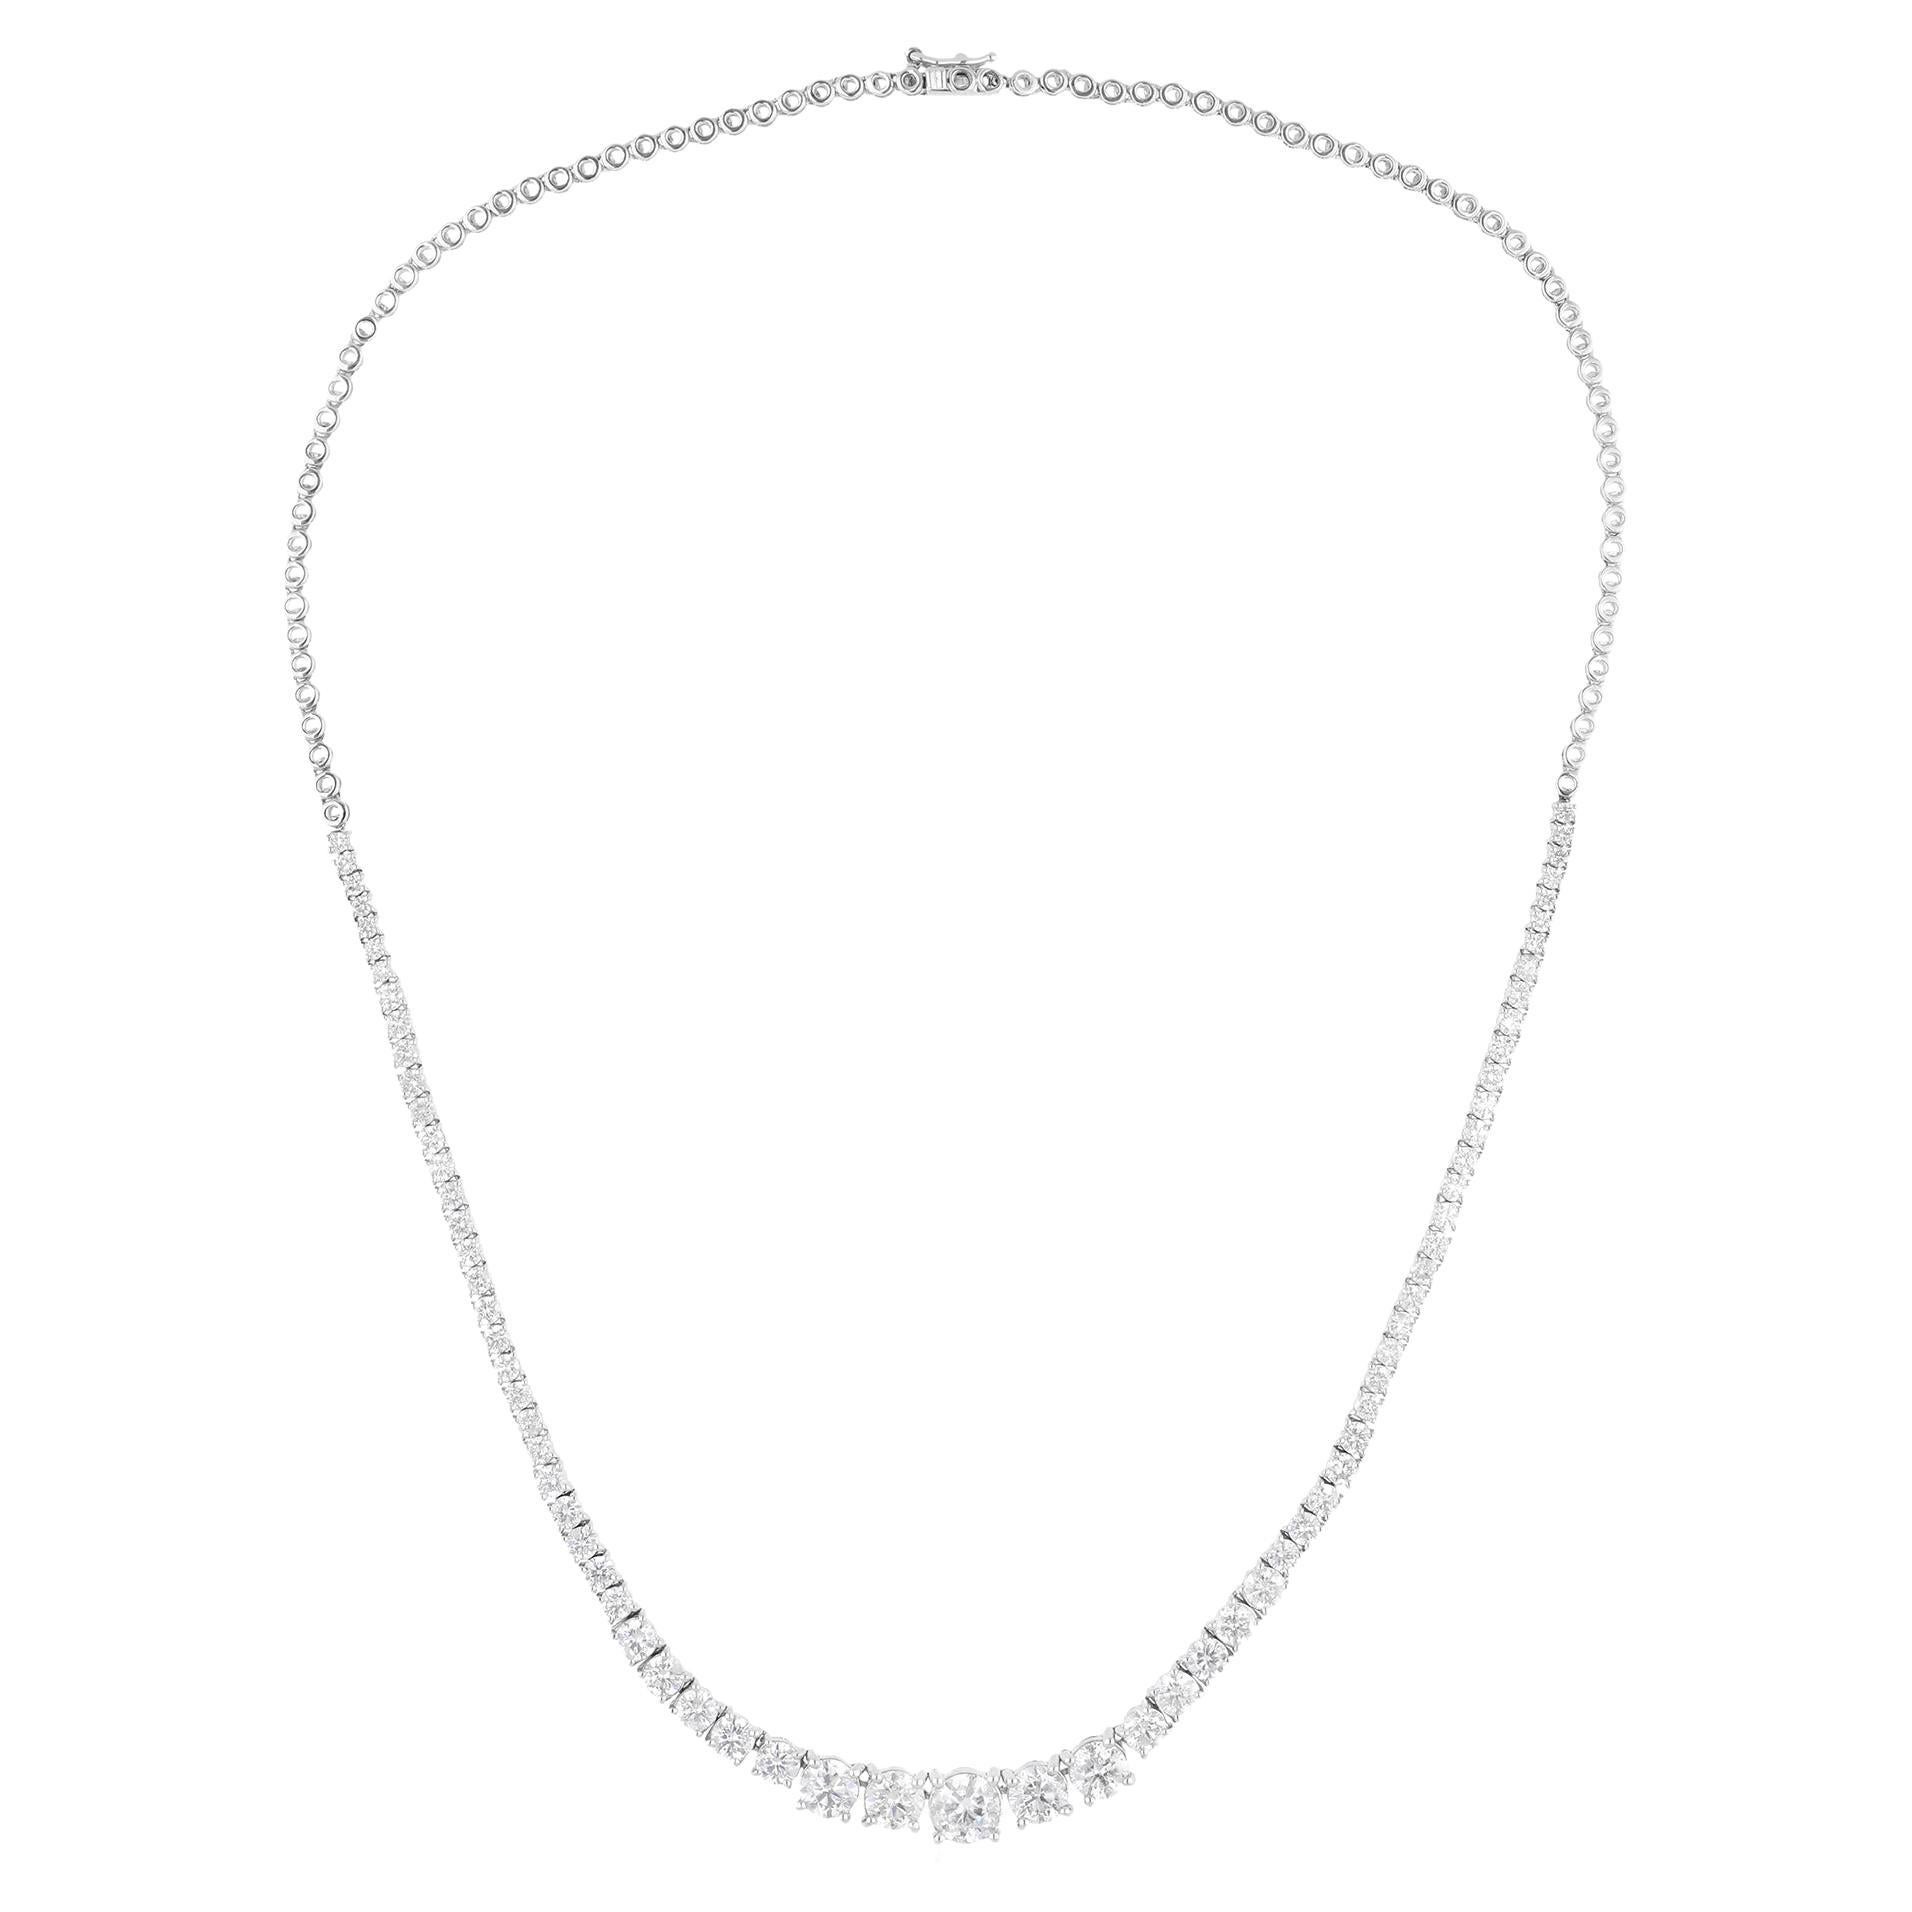 Natural 7.17 Carat Round Diamond Necklace 18 Karat White Gold Handmade Jewelry For Sale